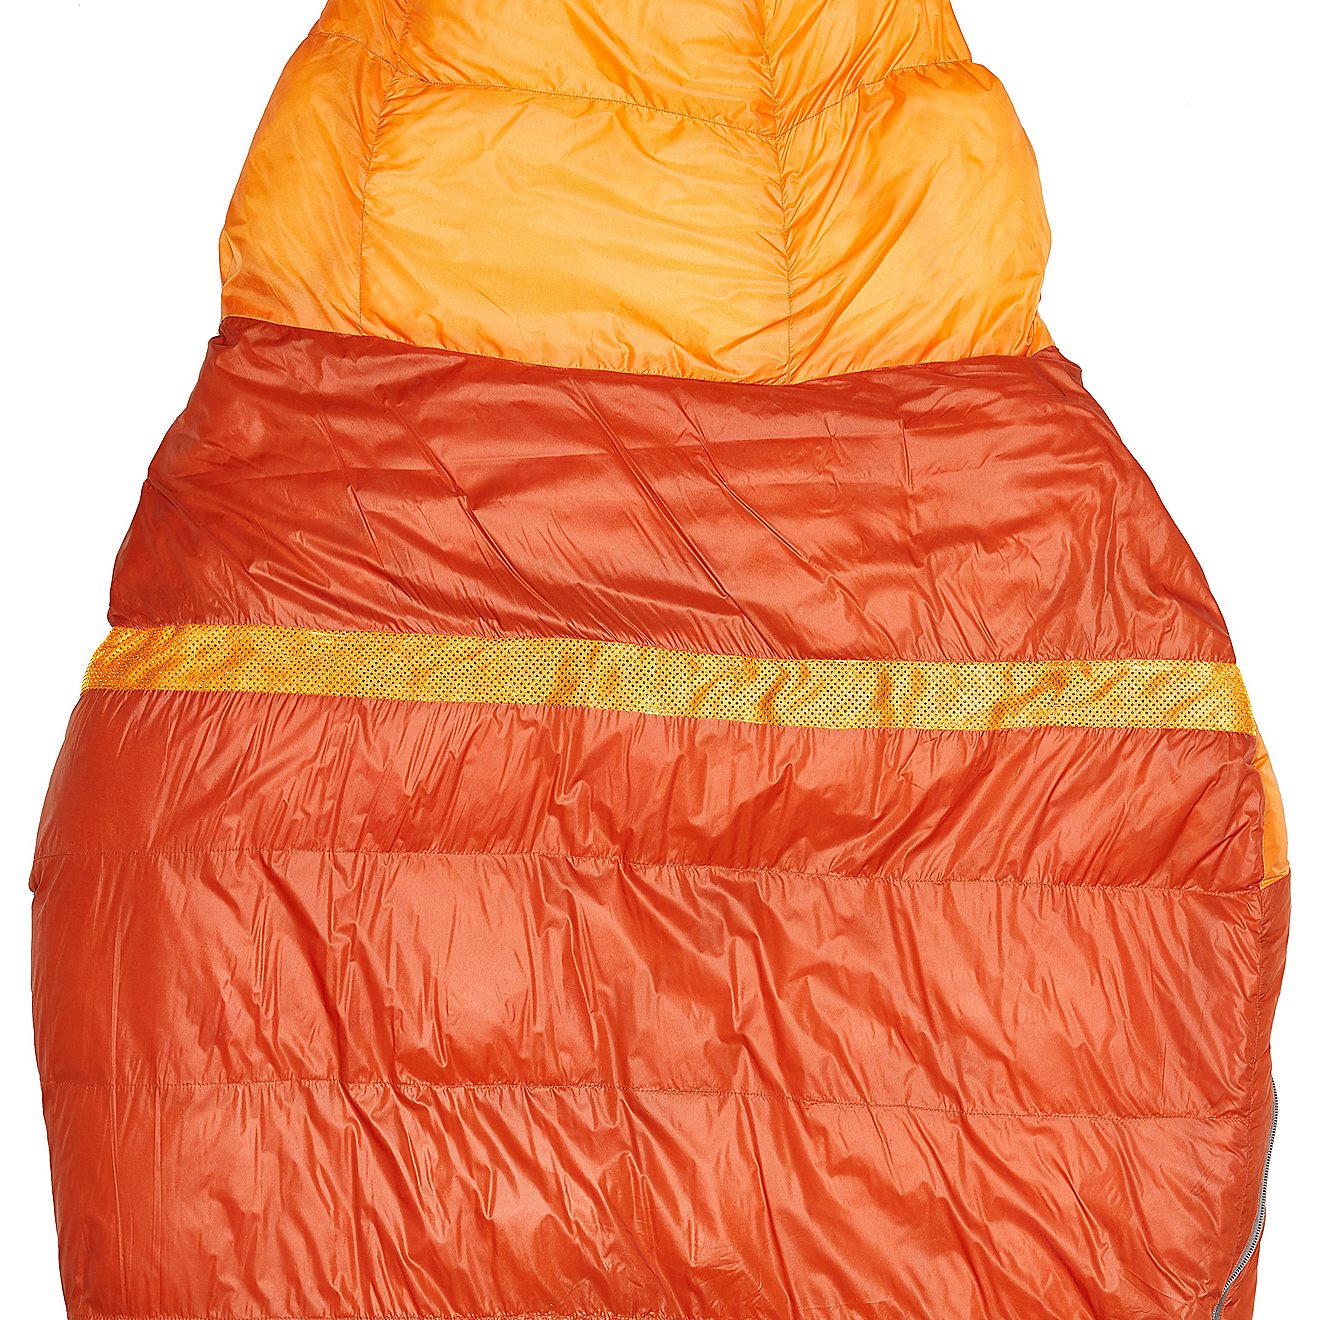 Magellan Outdoors Pro 40°F Mummy Sleeping Bag | Academy